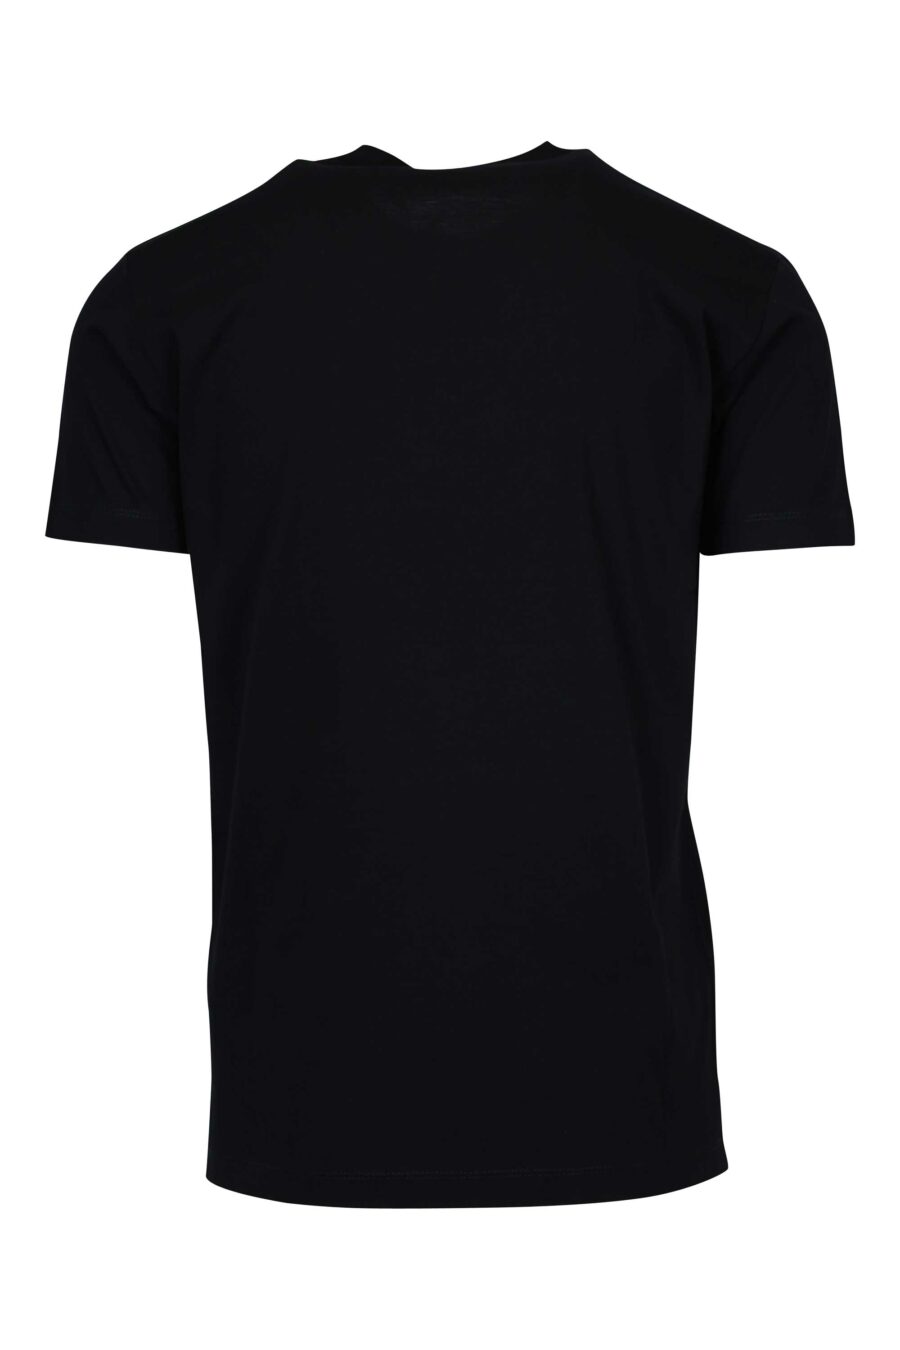 Schwarzes T-Shirt mit mehrfarbigem Retro-Maxilogo - 8054148447502 1